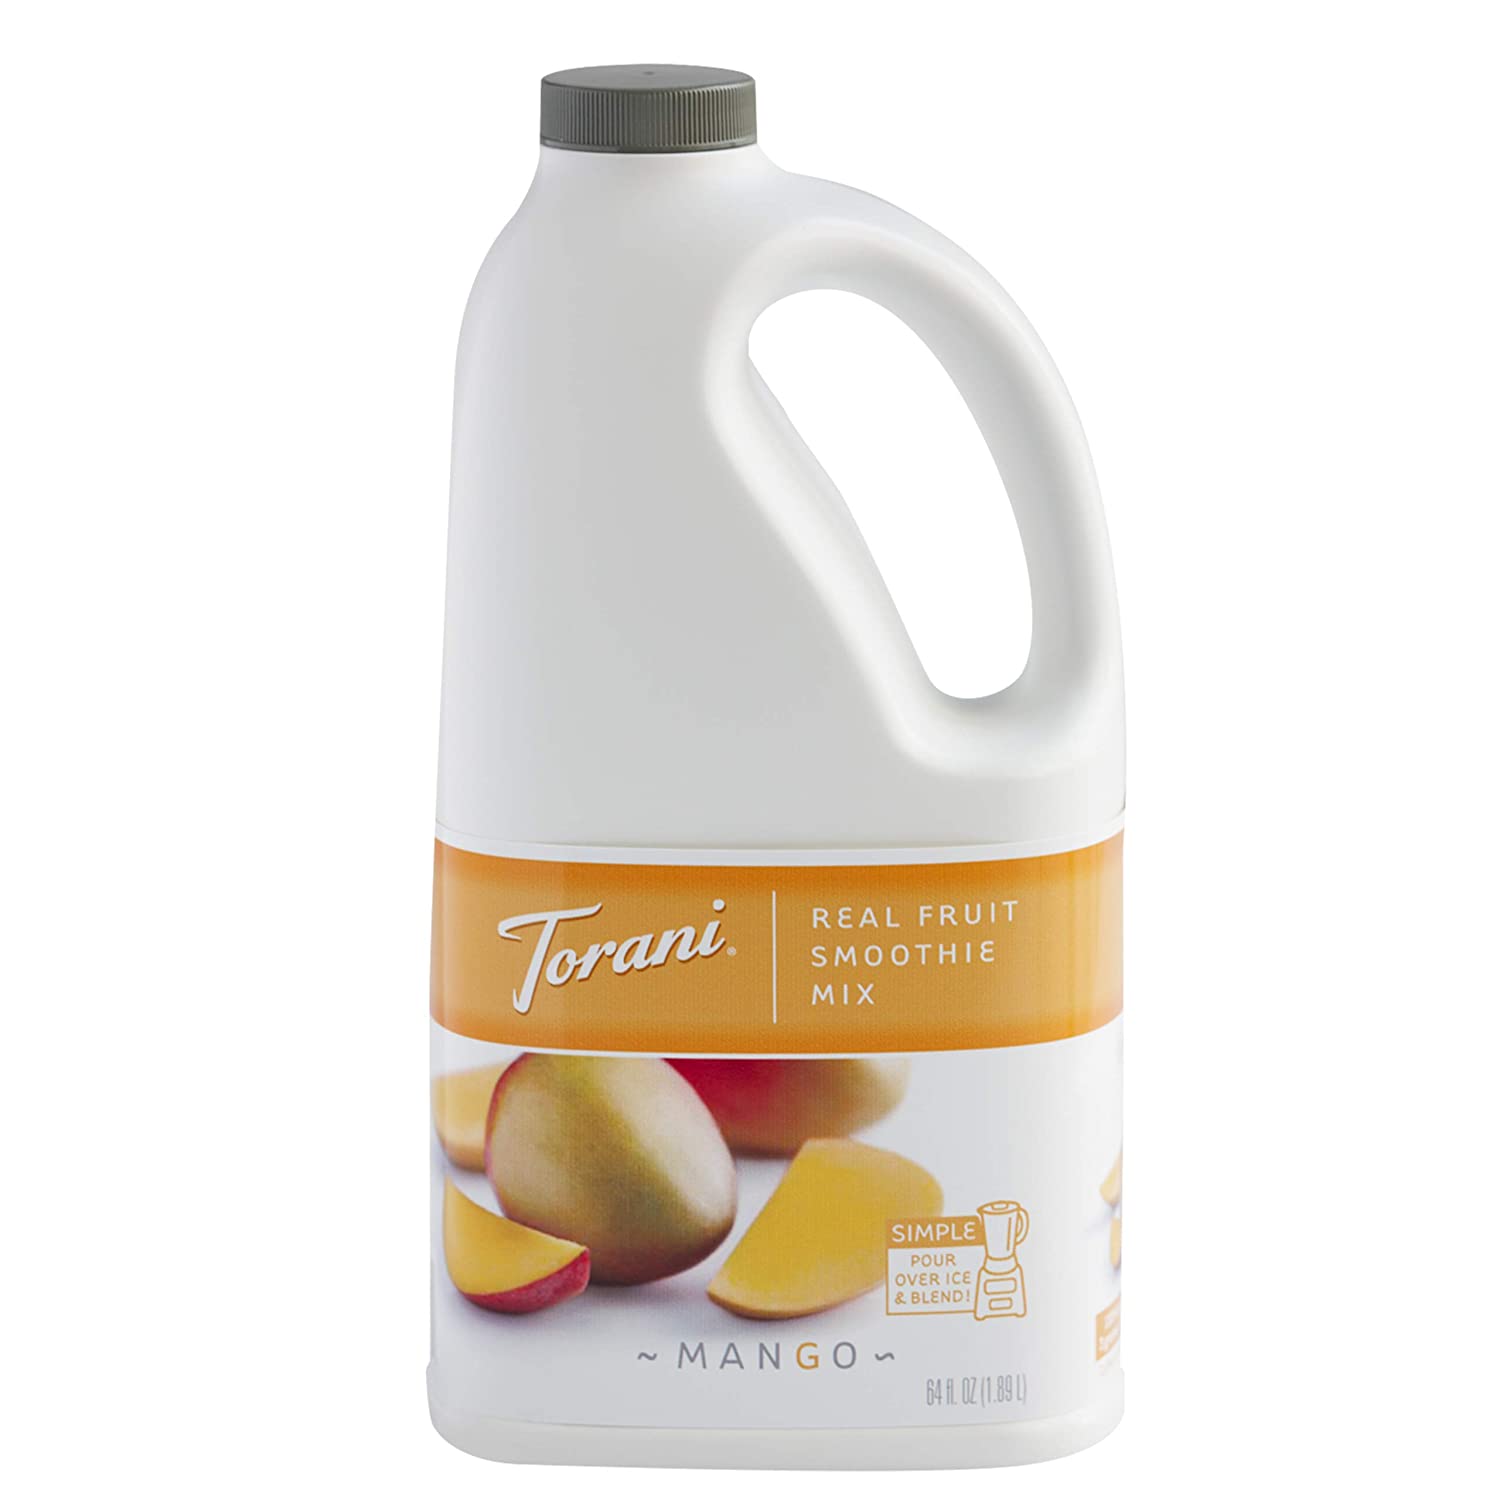 Torani Real Fruit Smoothies - 64oz Jug: Mango